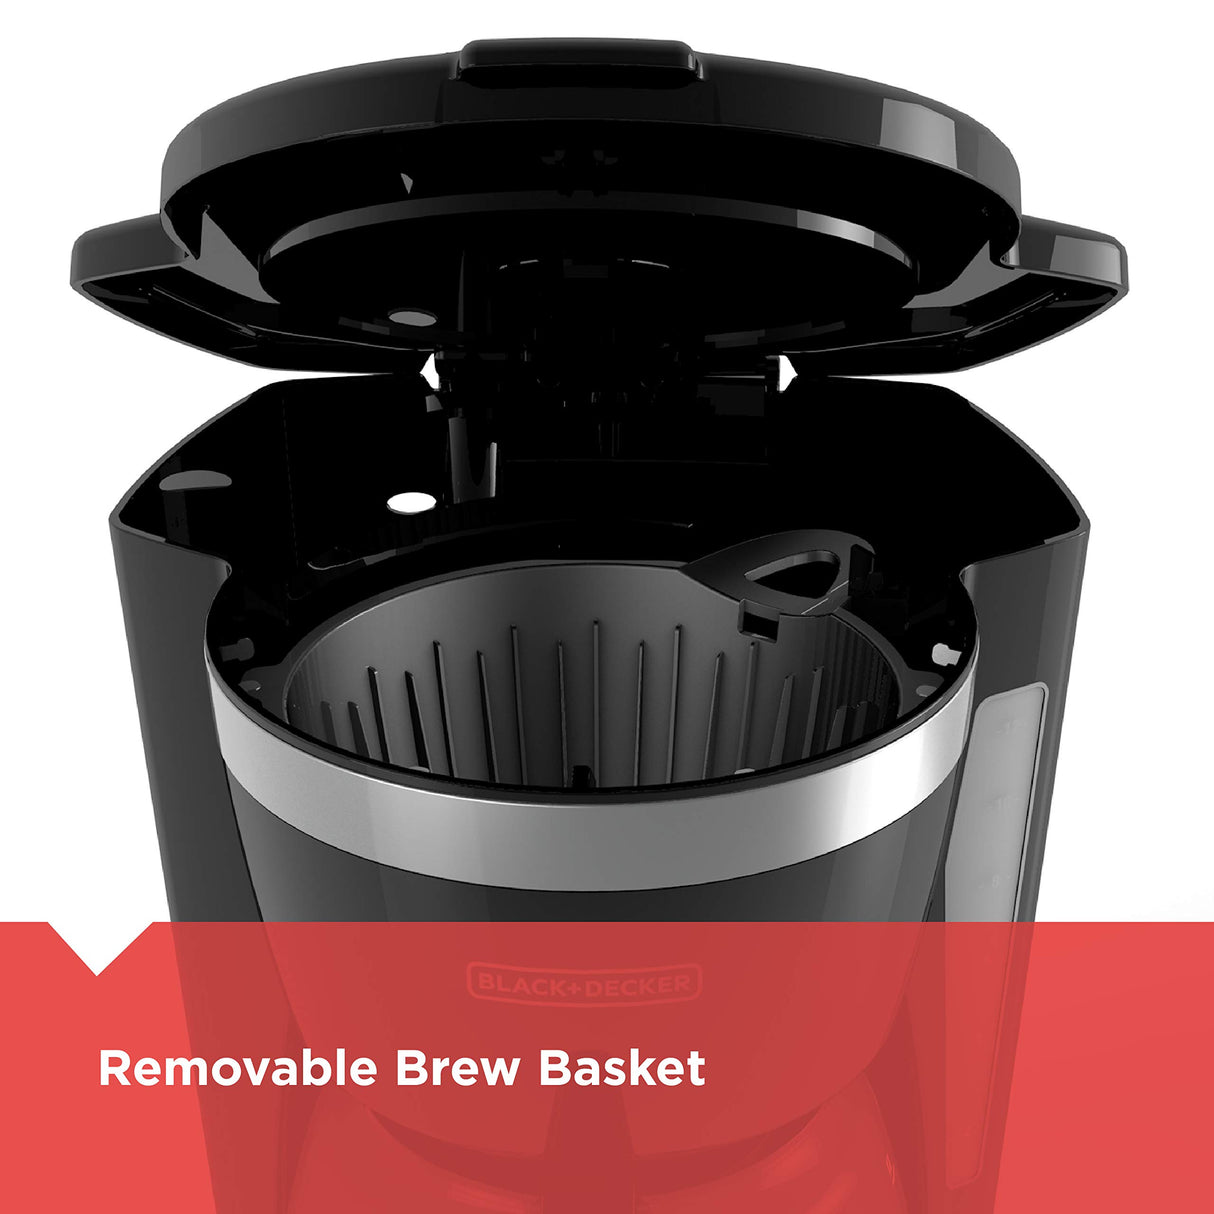 BLACK+DECKER 12-Cup Digital Coffee Maker, CM1160B, Programmable, Washable Basket Filter, Sneak-A-Cup, Auto Brew, Water Window, Keep Hot Plate, Black